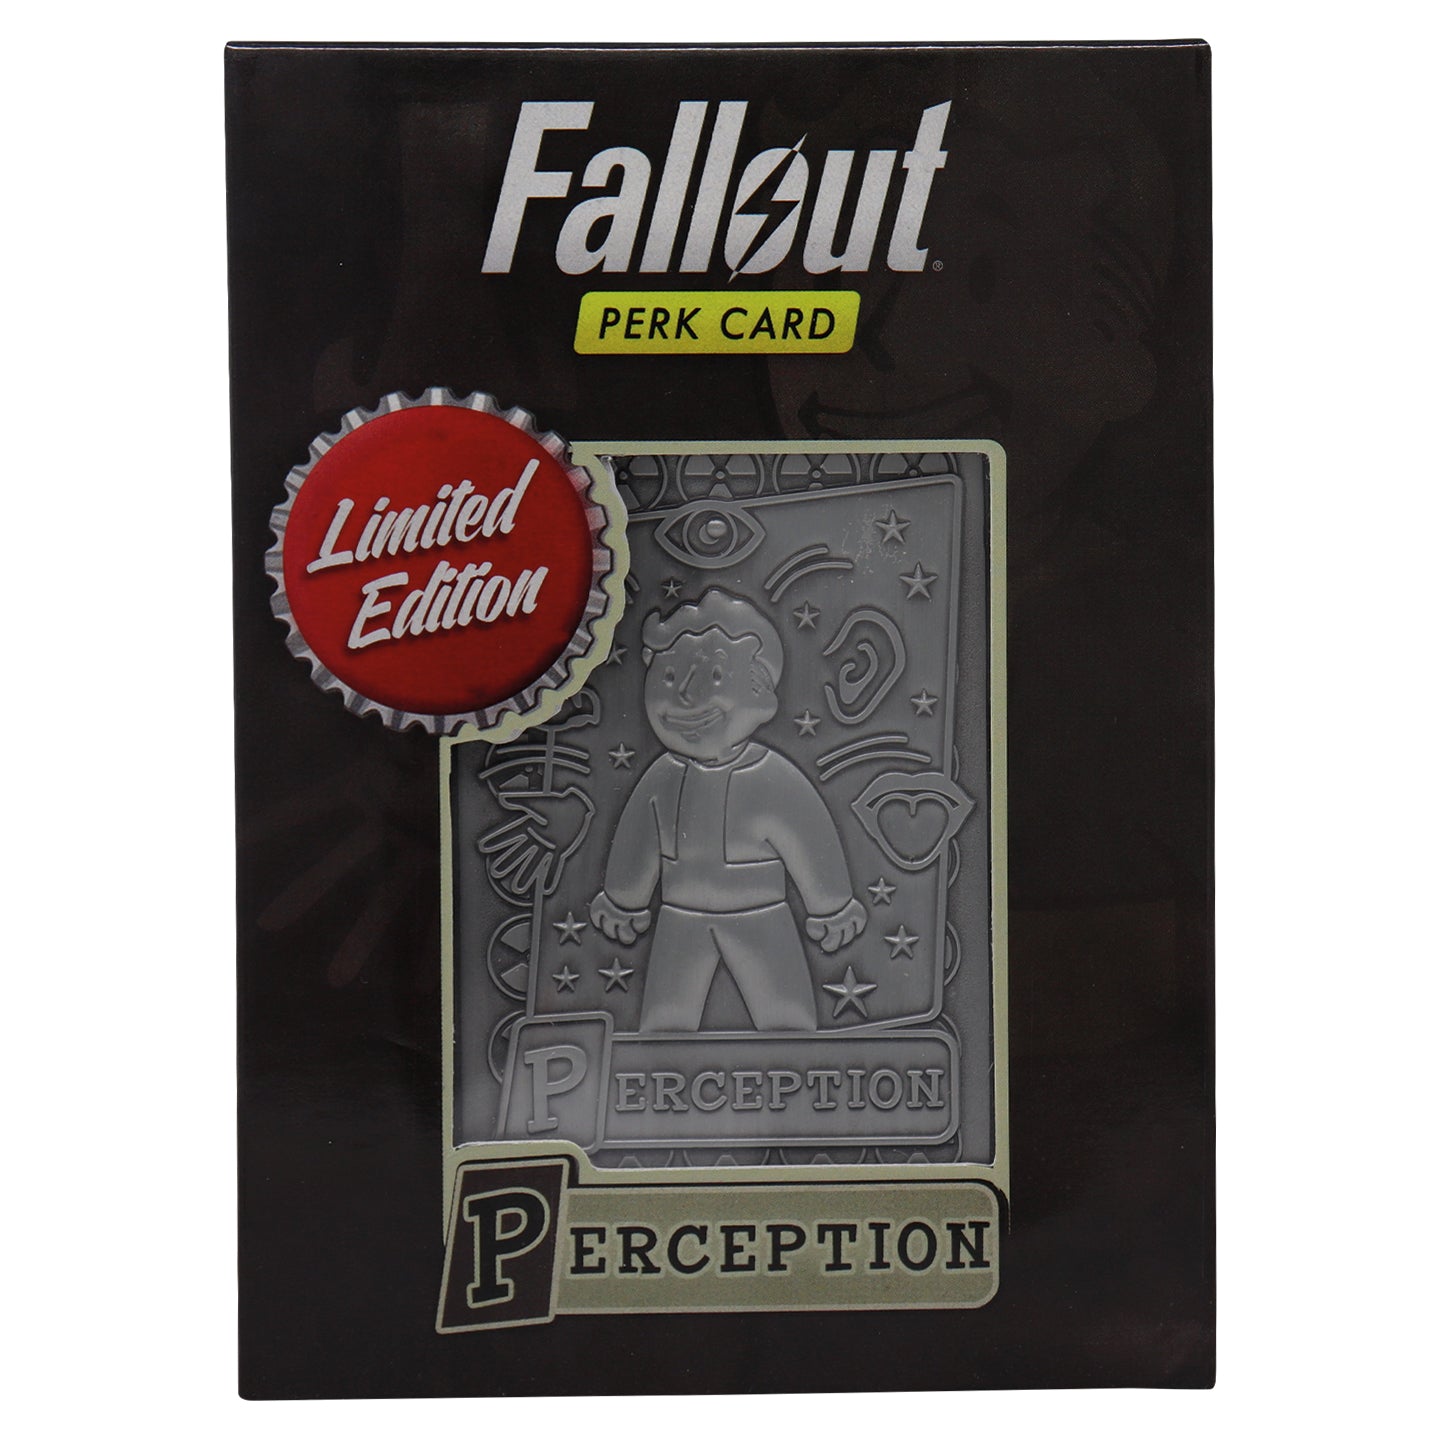 Fallout Limited Edition Replica Perception Perk Card